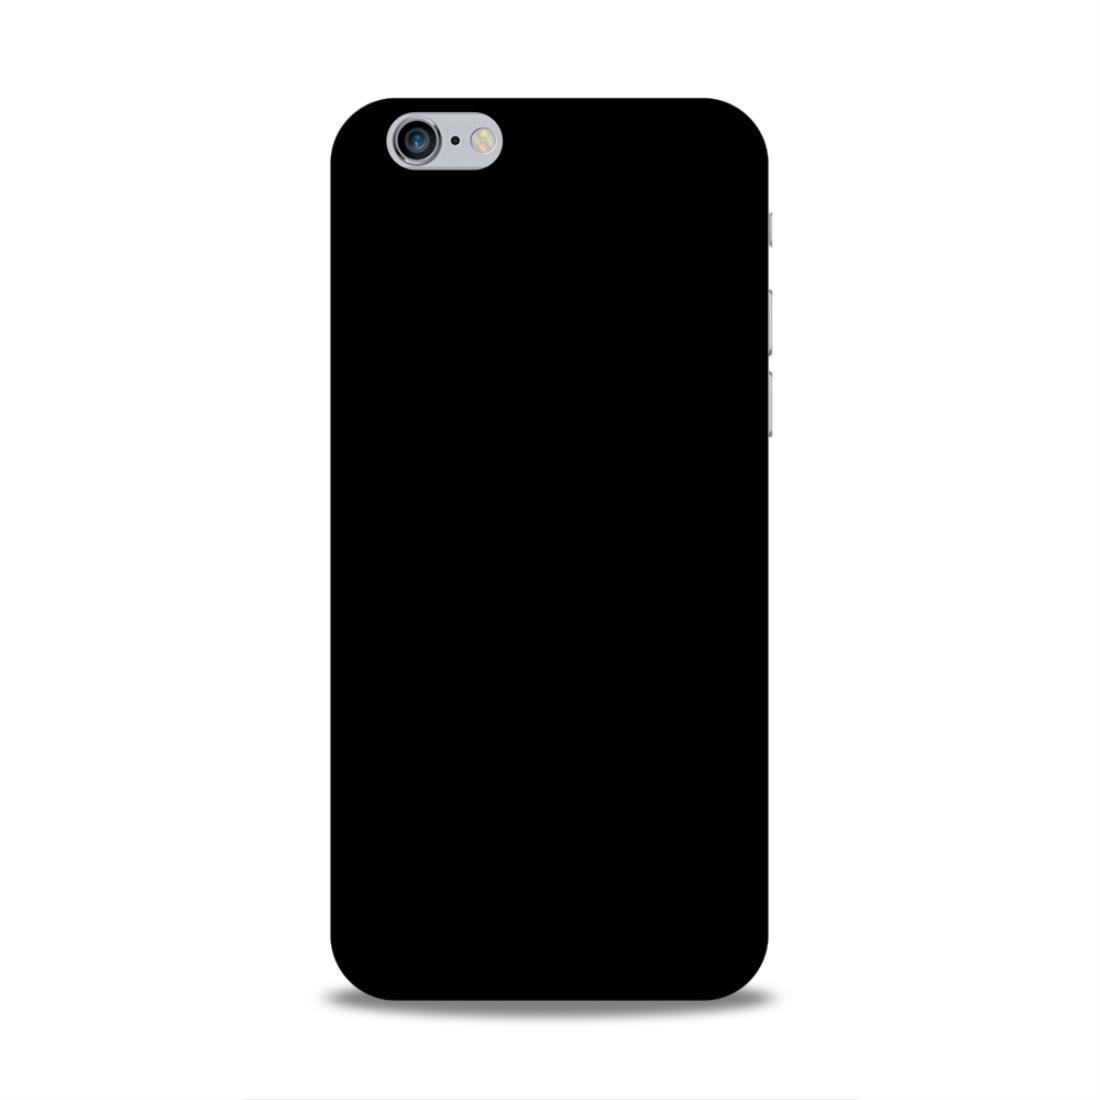 Black Classic Plain iPhone 6s Phone Cover Case Case